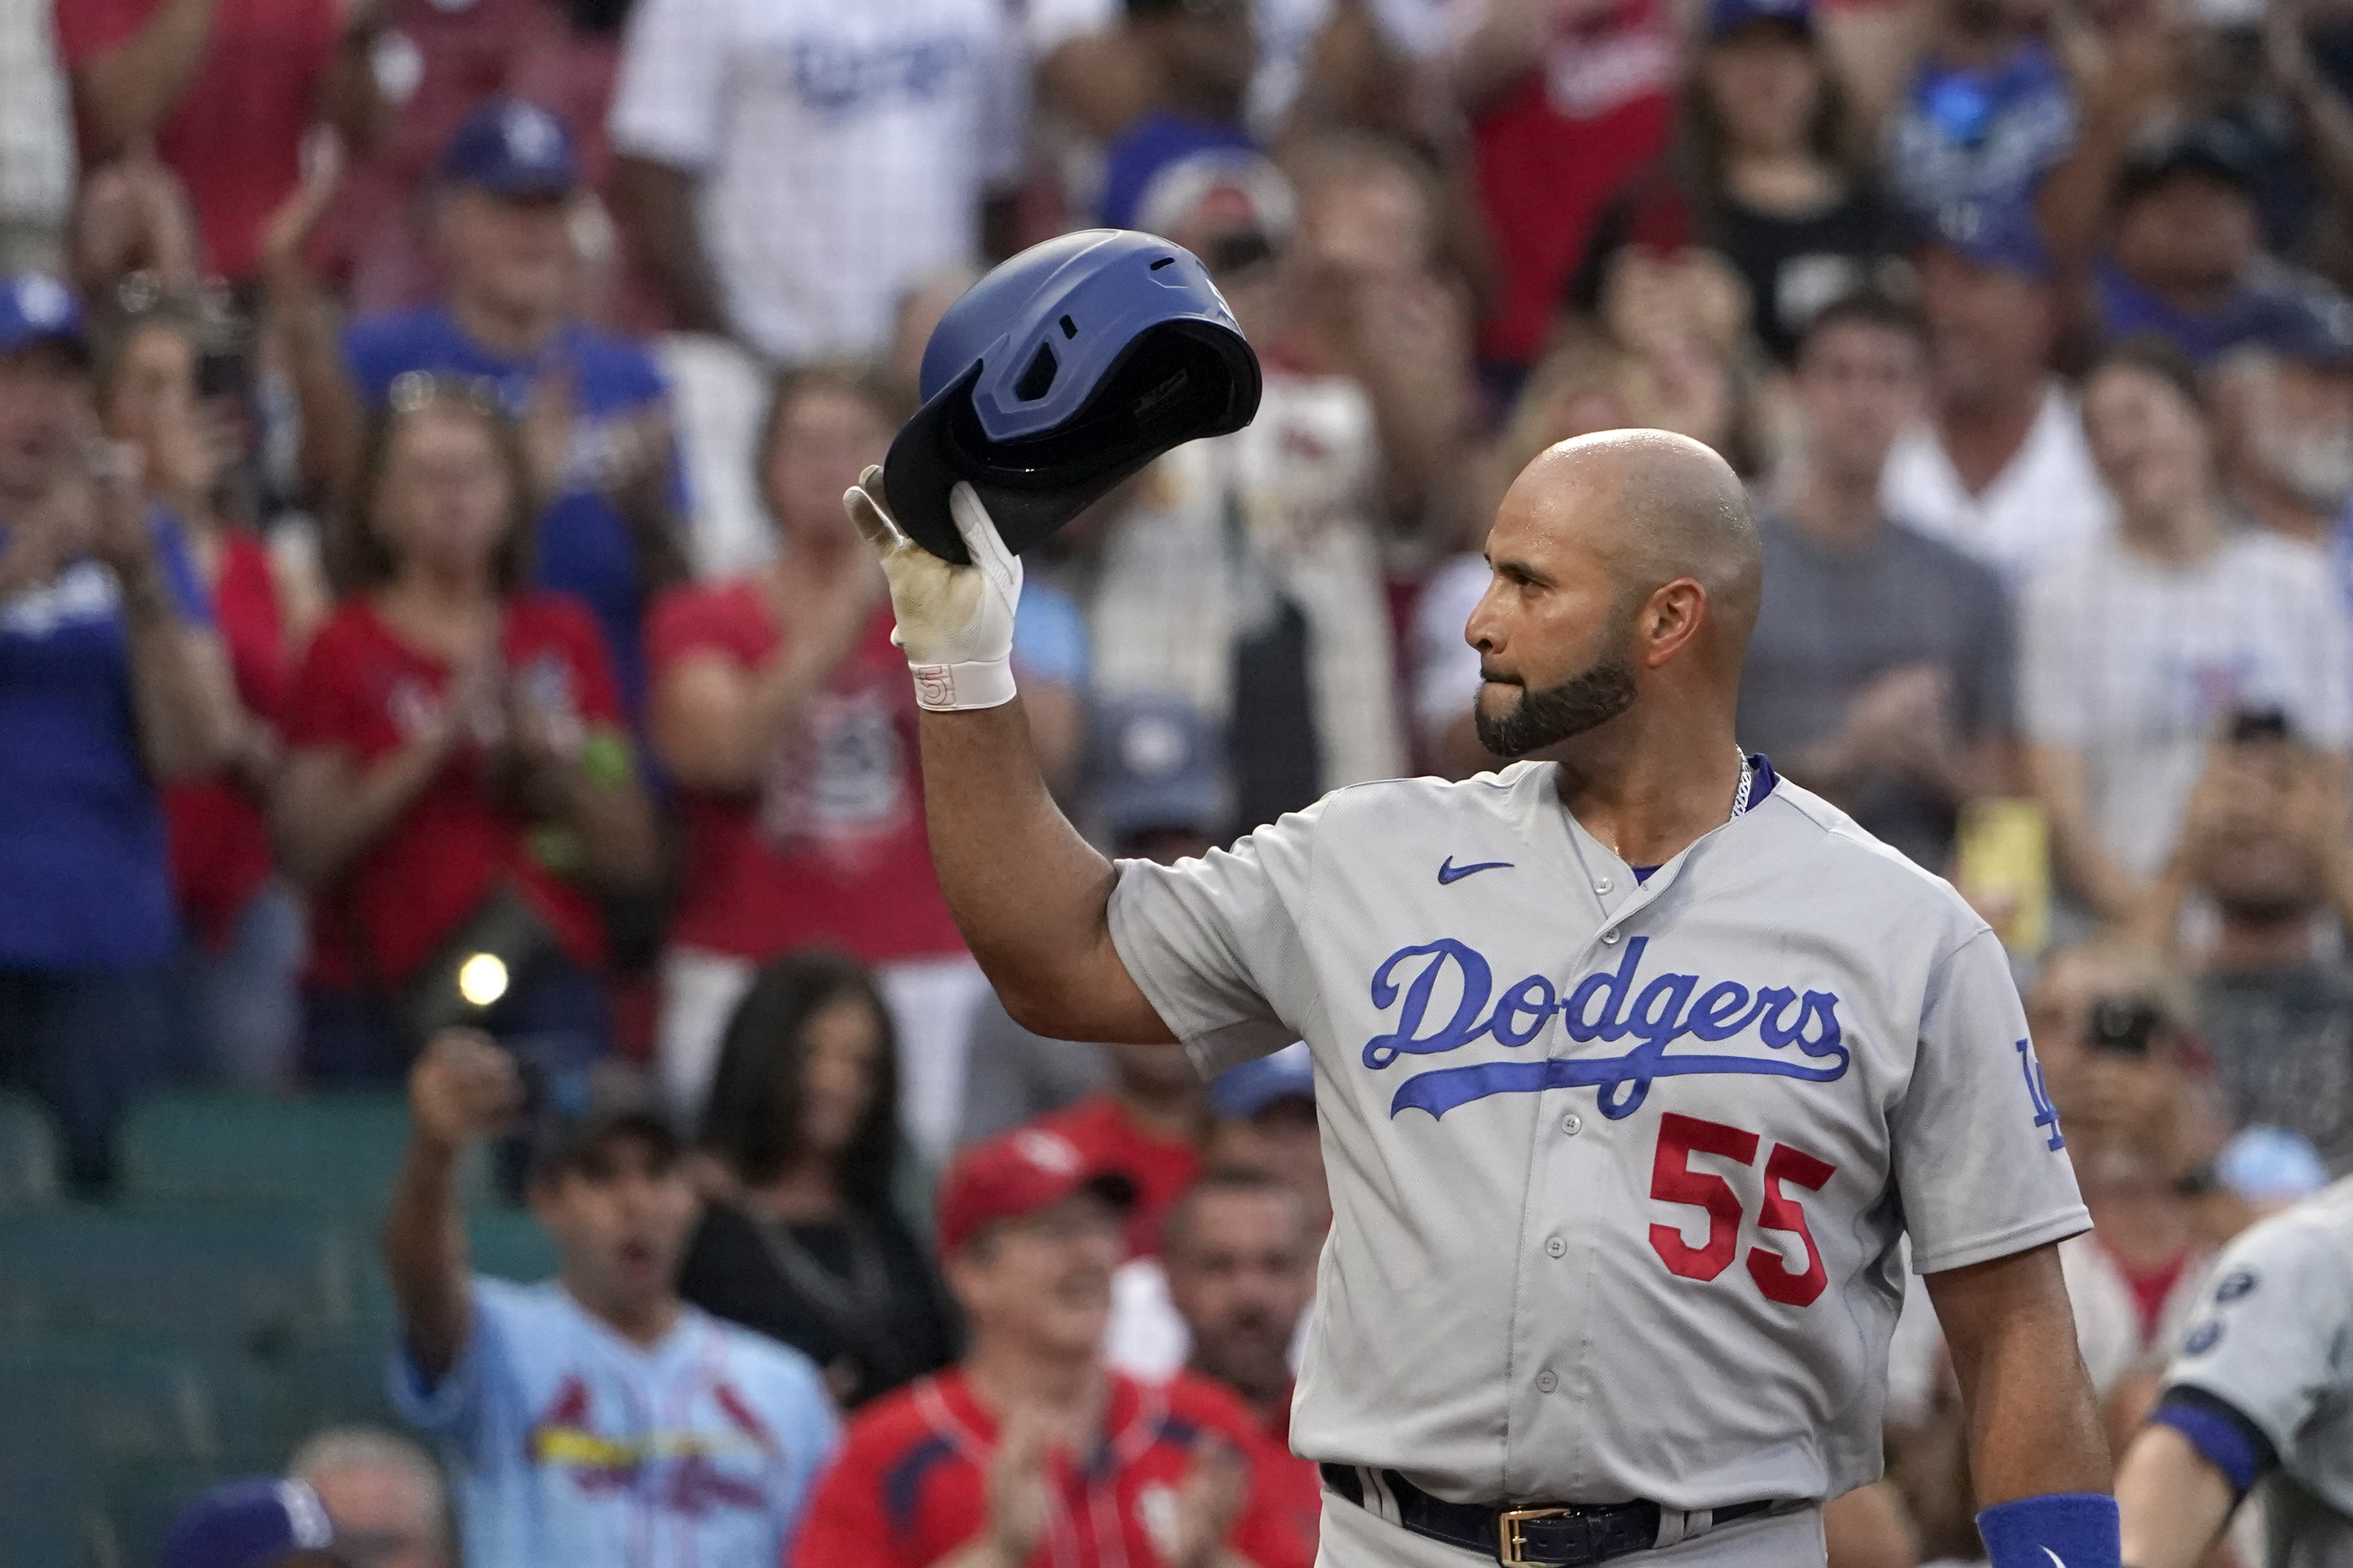 Roberts: Sight of Pujols in Dodgers uniform was 'surreal